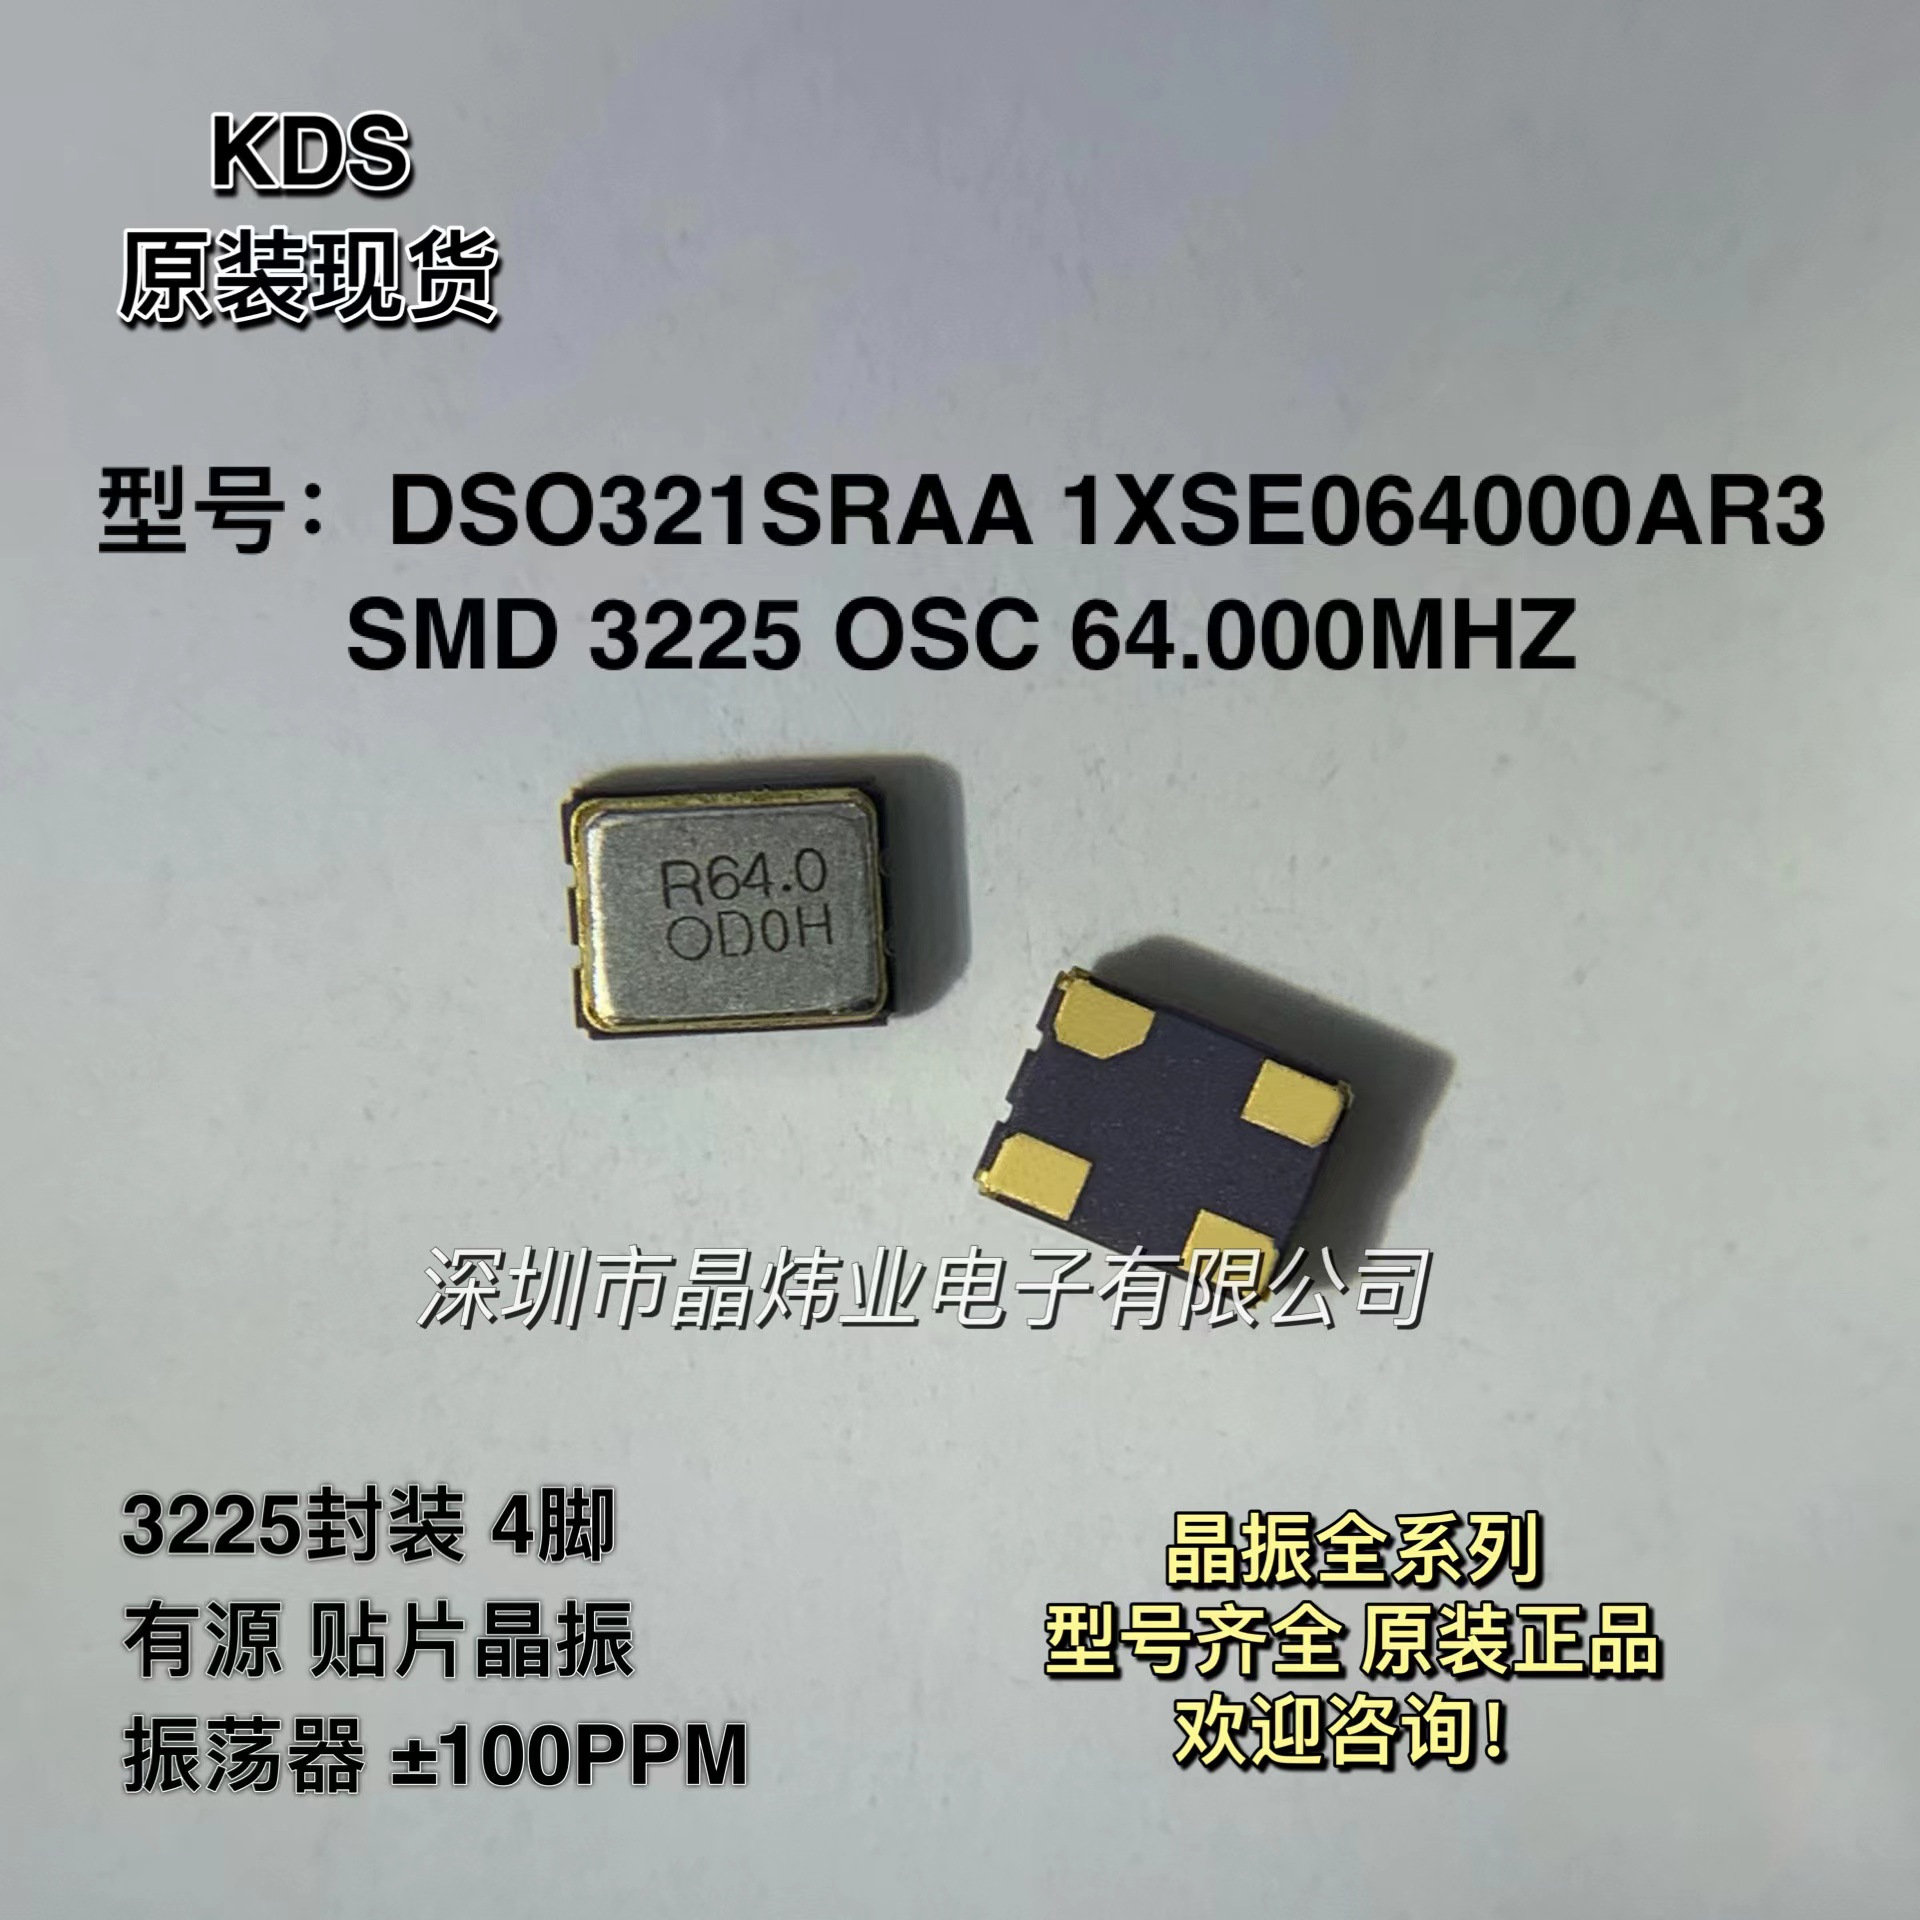 3225 OSC 64MHZ 64.000MHZ 有源贴片晶振 DSO321SRAA 64M 4脚振荡